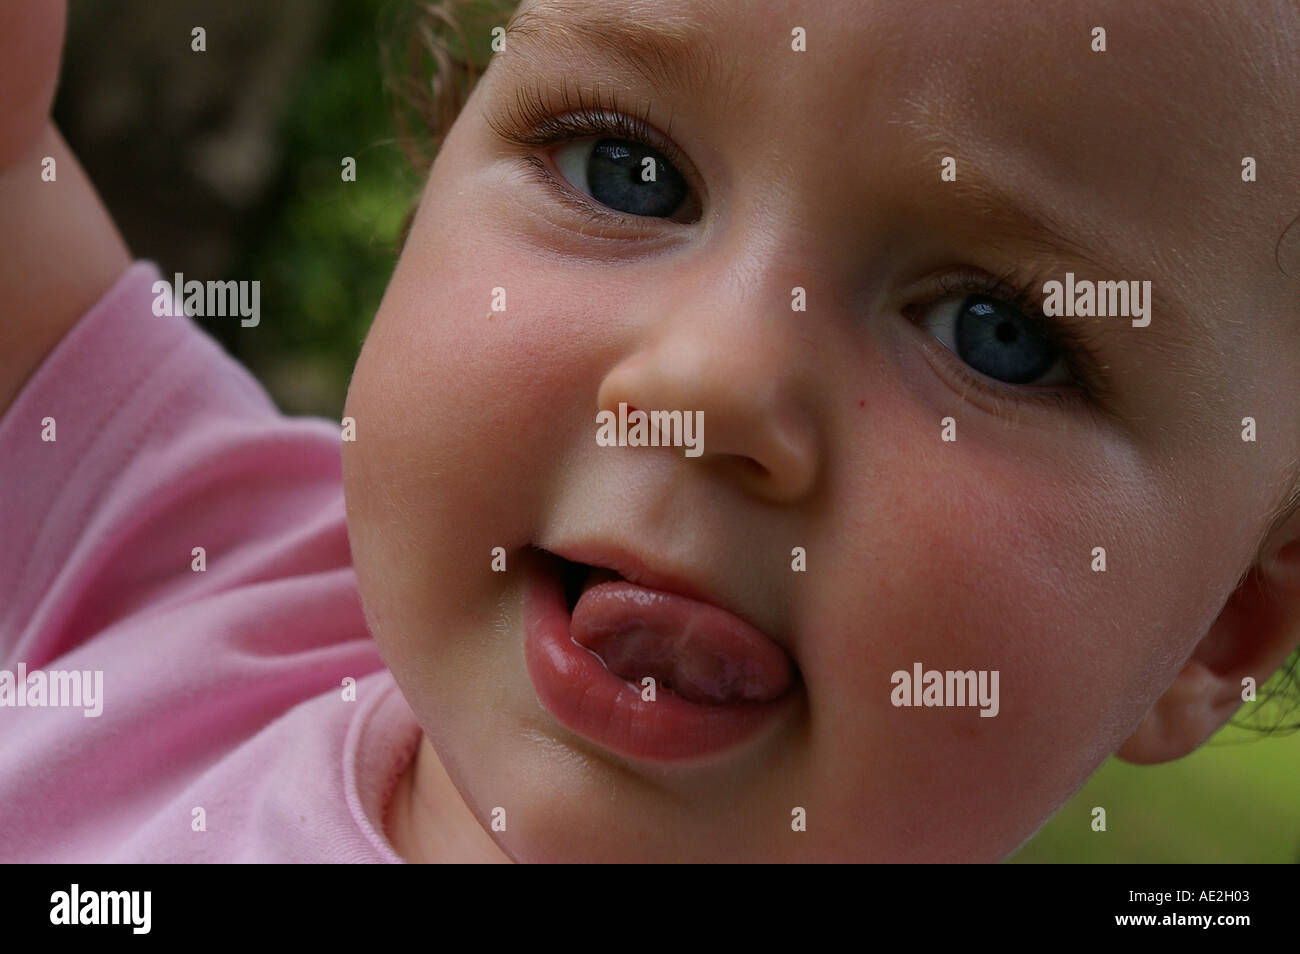 Baby little girl portrait closeup close up c u  poking tongue teething cheeky fun mischievous blue eyes eyed Stock Photo